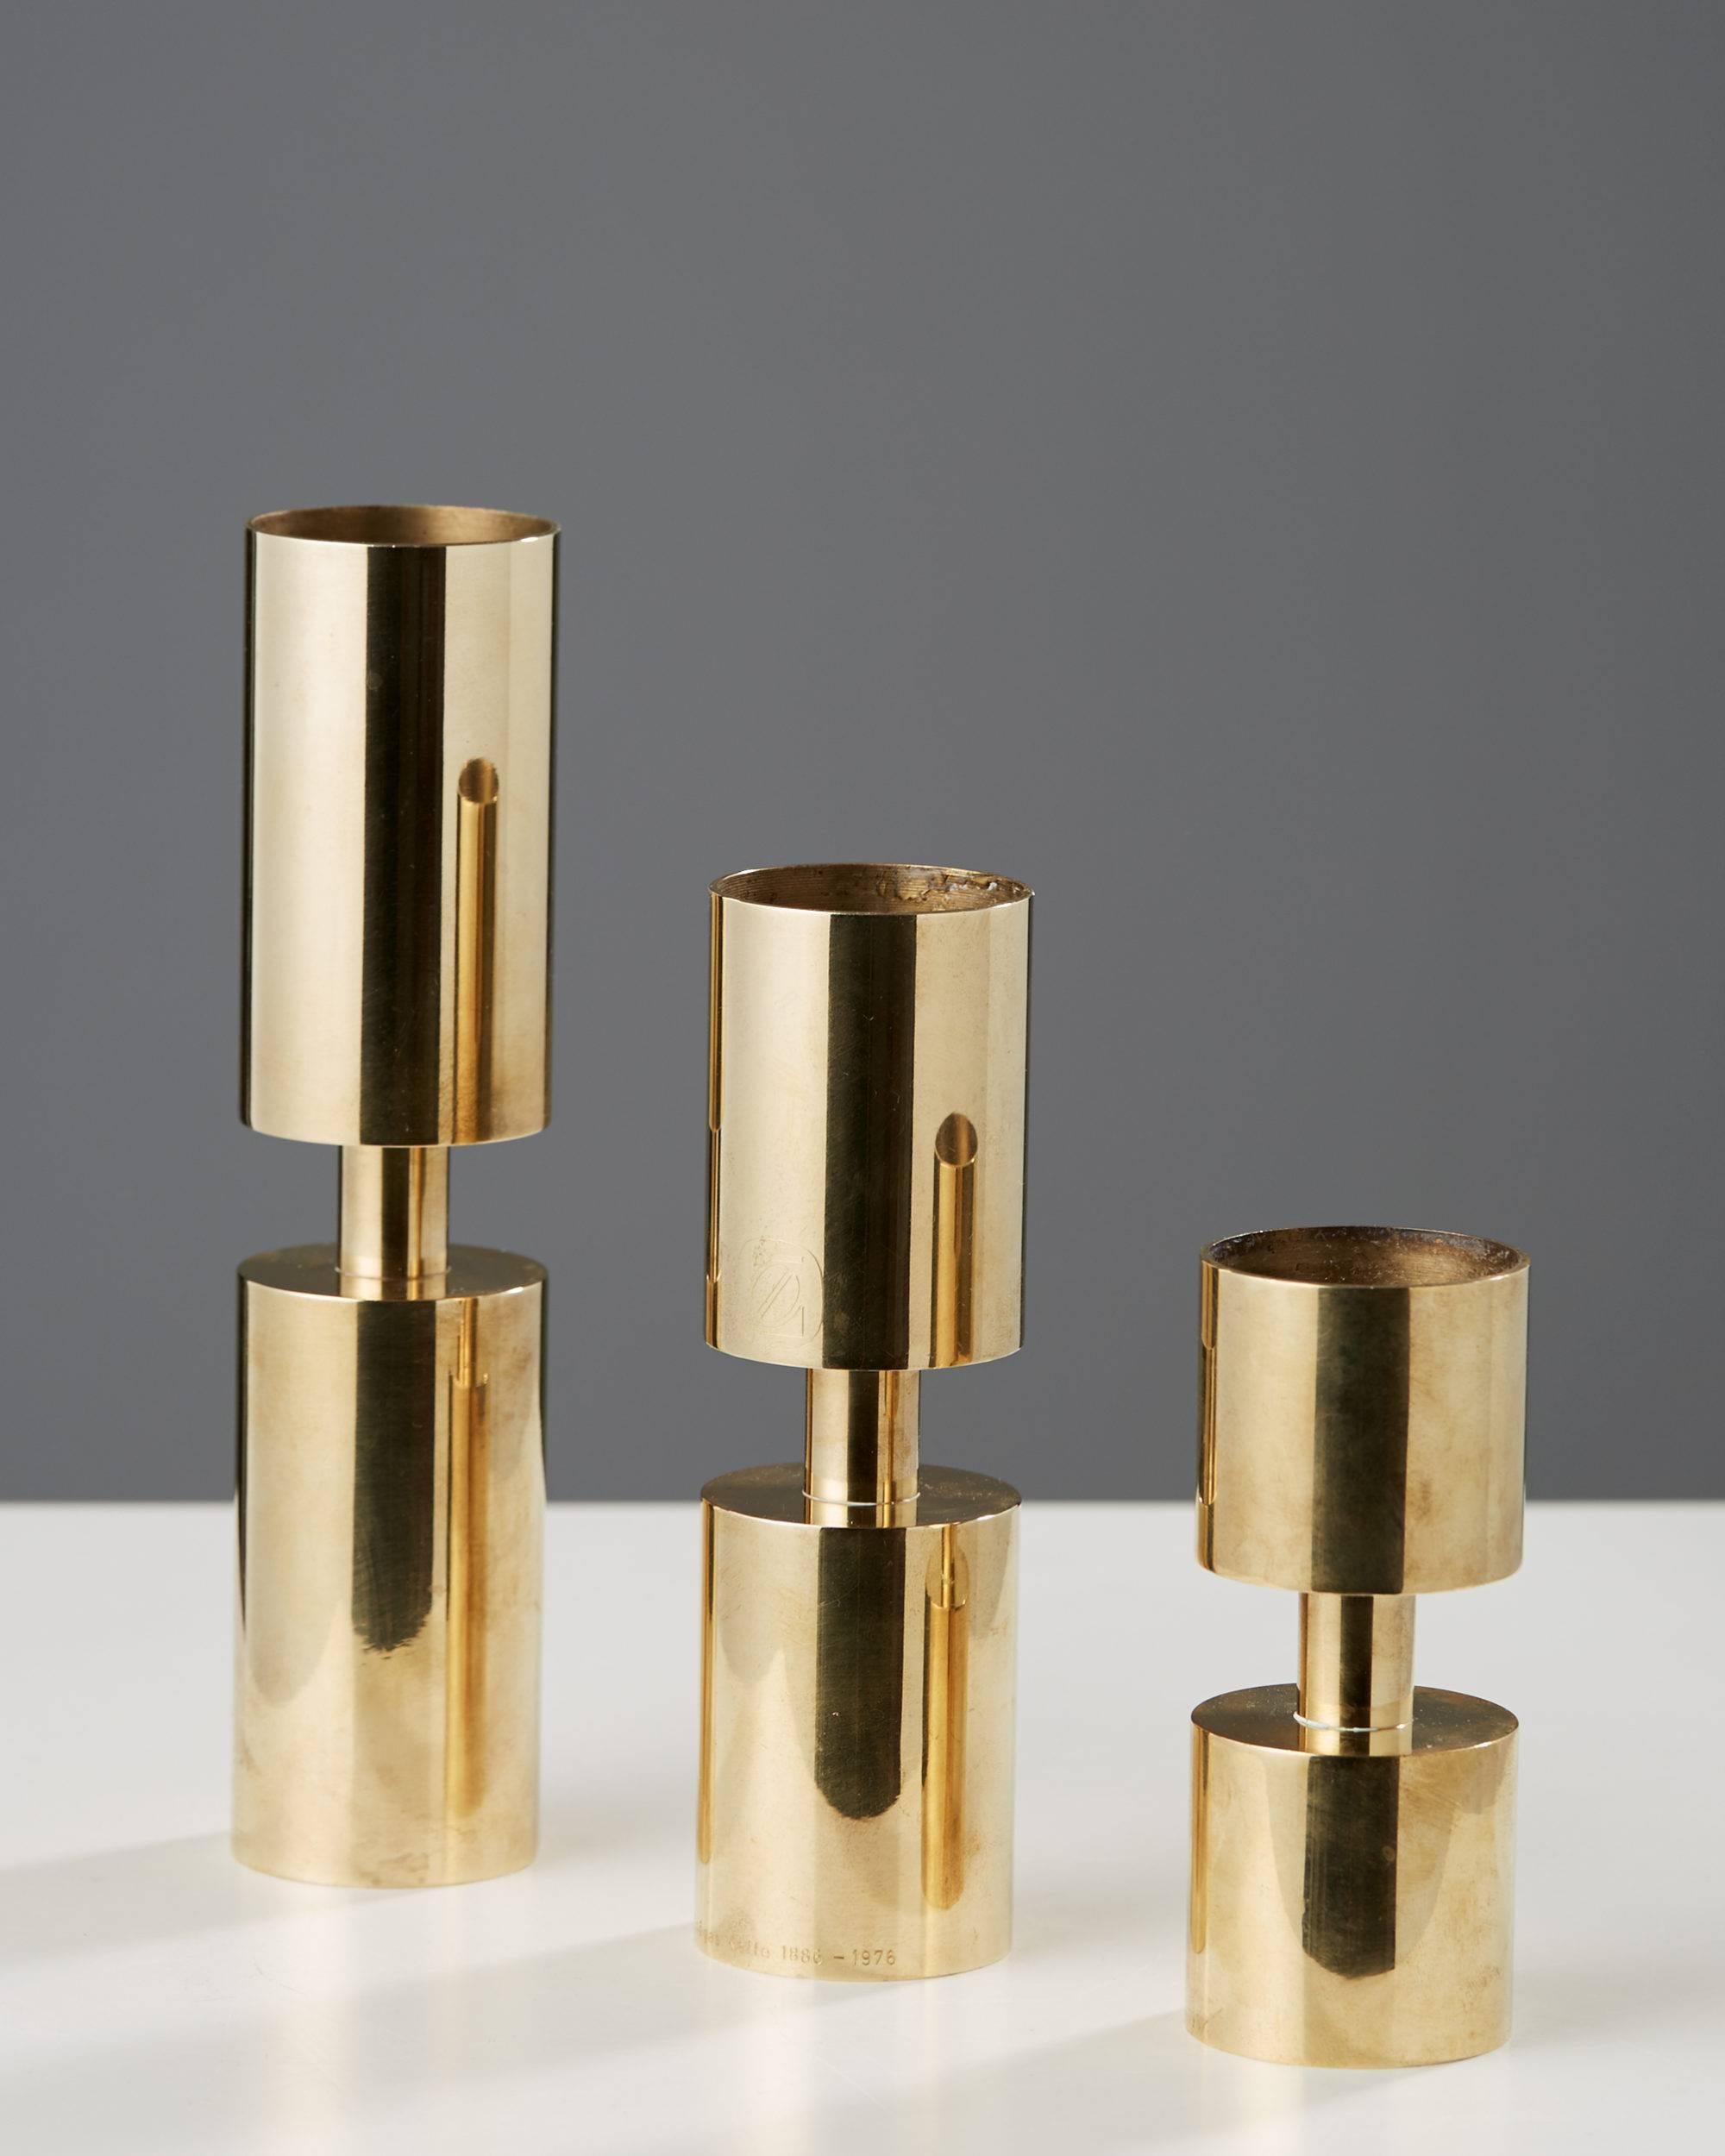 Set of three candleholders for Zoega, Sweden.
1976.

Brass.

Measures: H 10-18 cm/ 4